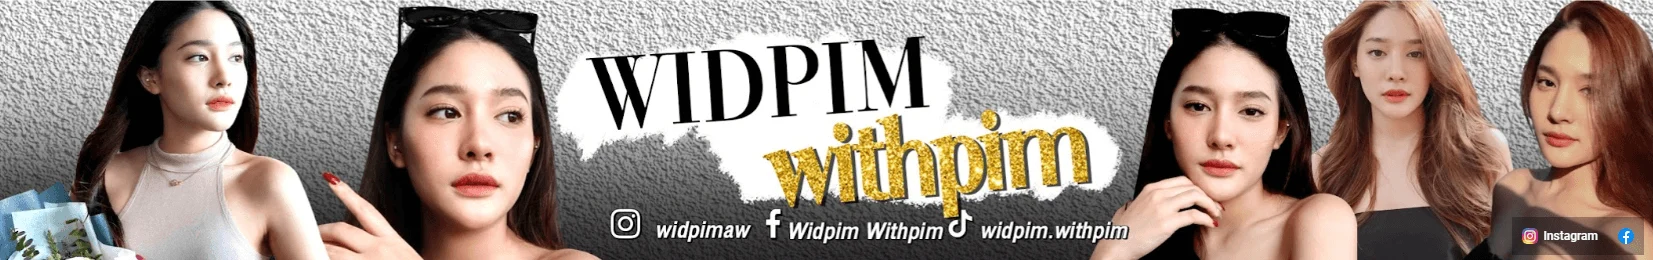 dermaster-thailand-review-widpim-withpim-youtube-banner